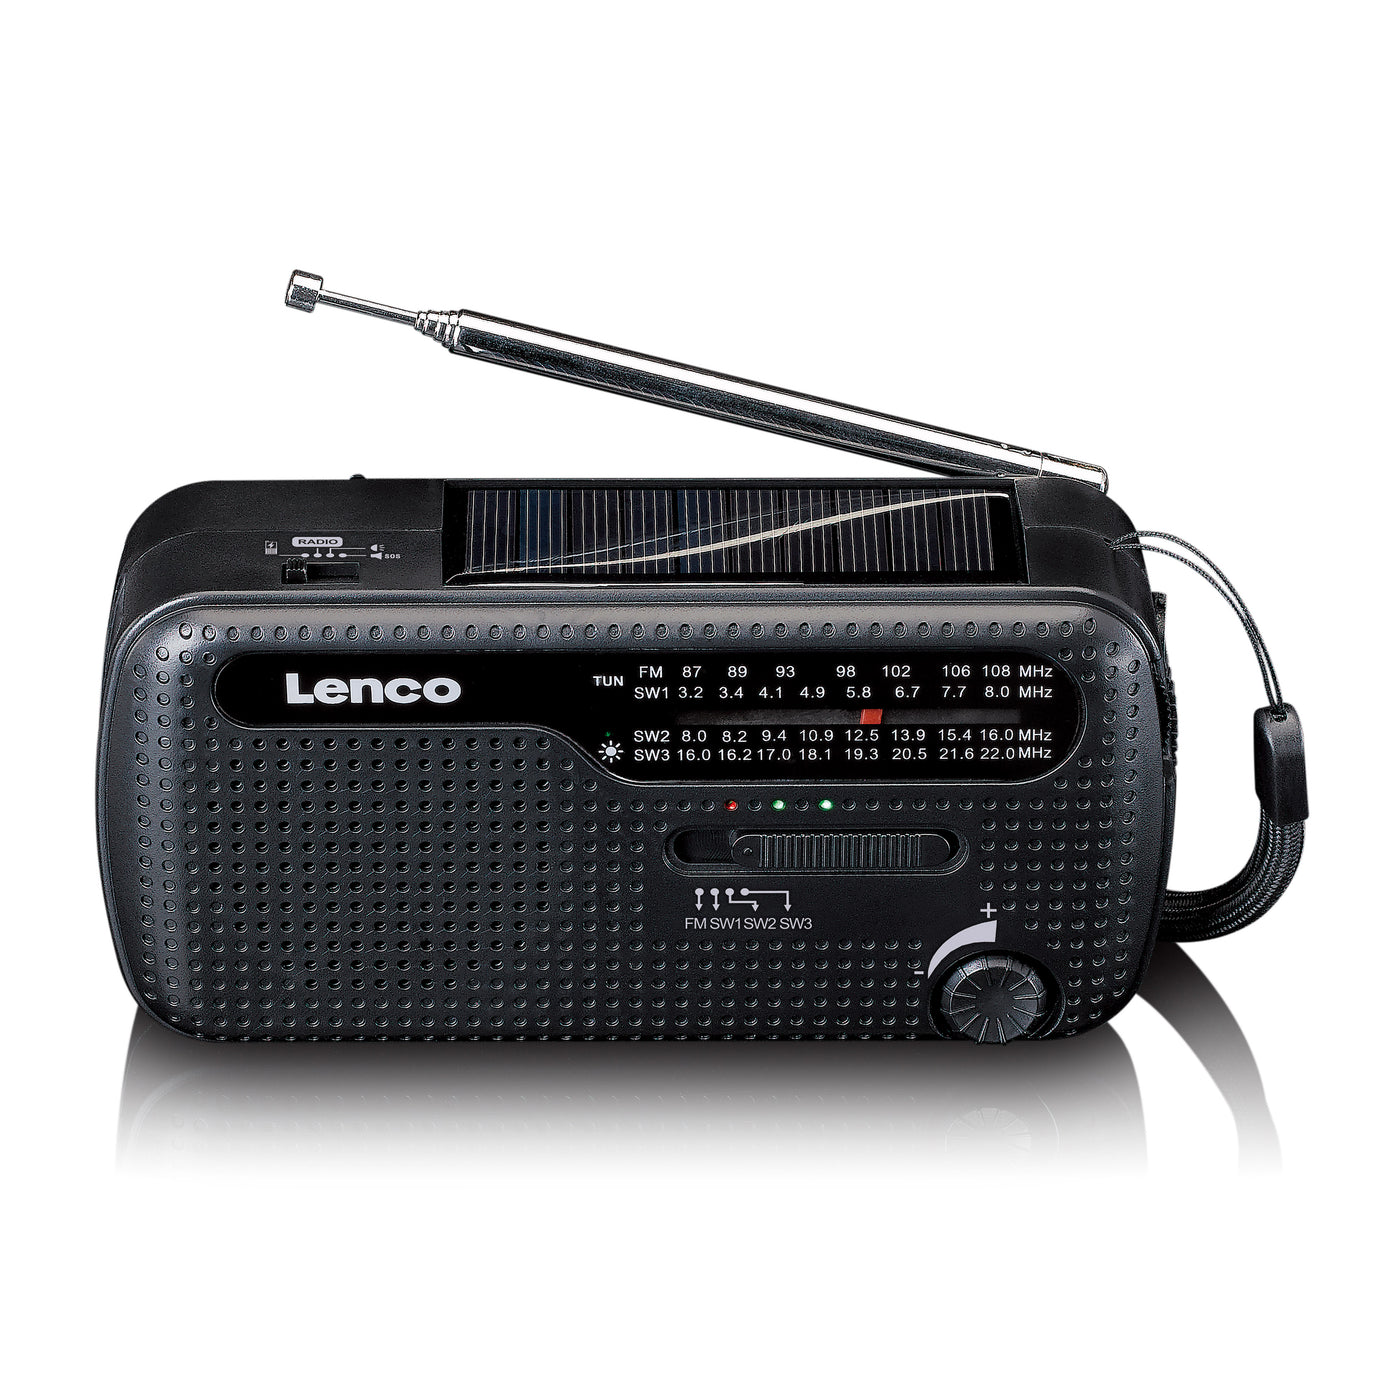 LENCO MCR-112BK - Draagbare opwindbare noodradio, zaklamp en powerbank in één - Zwart